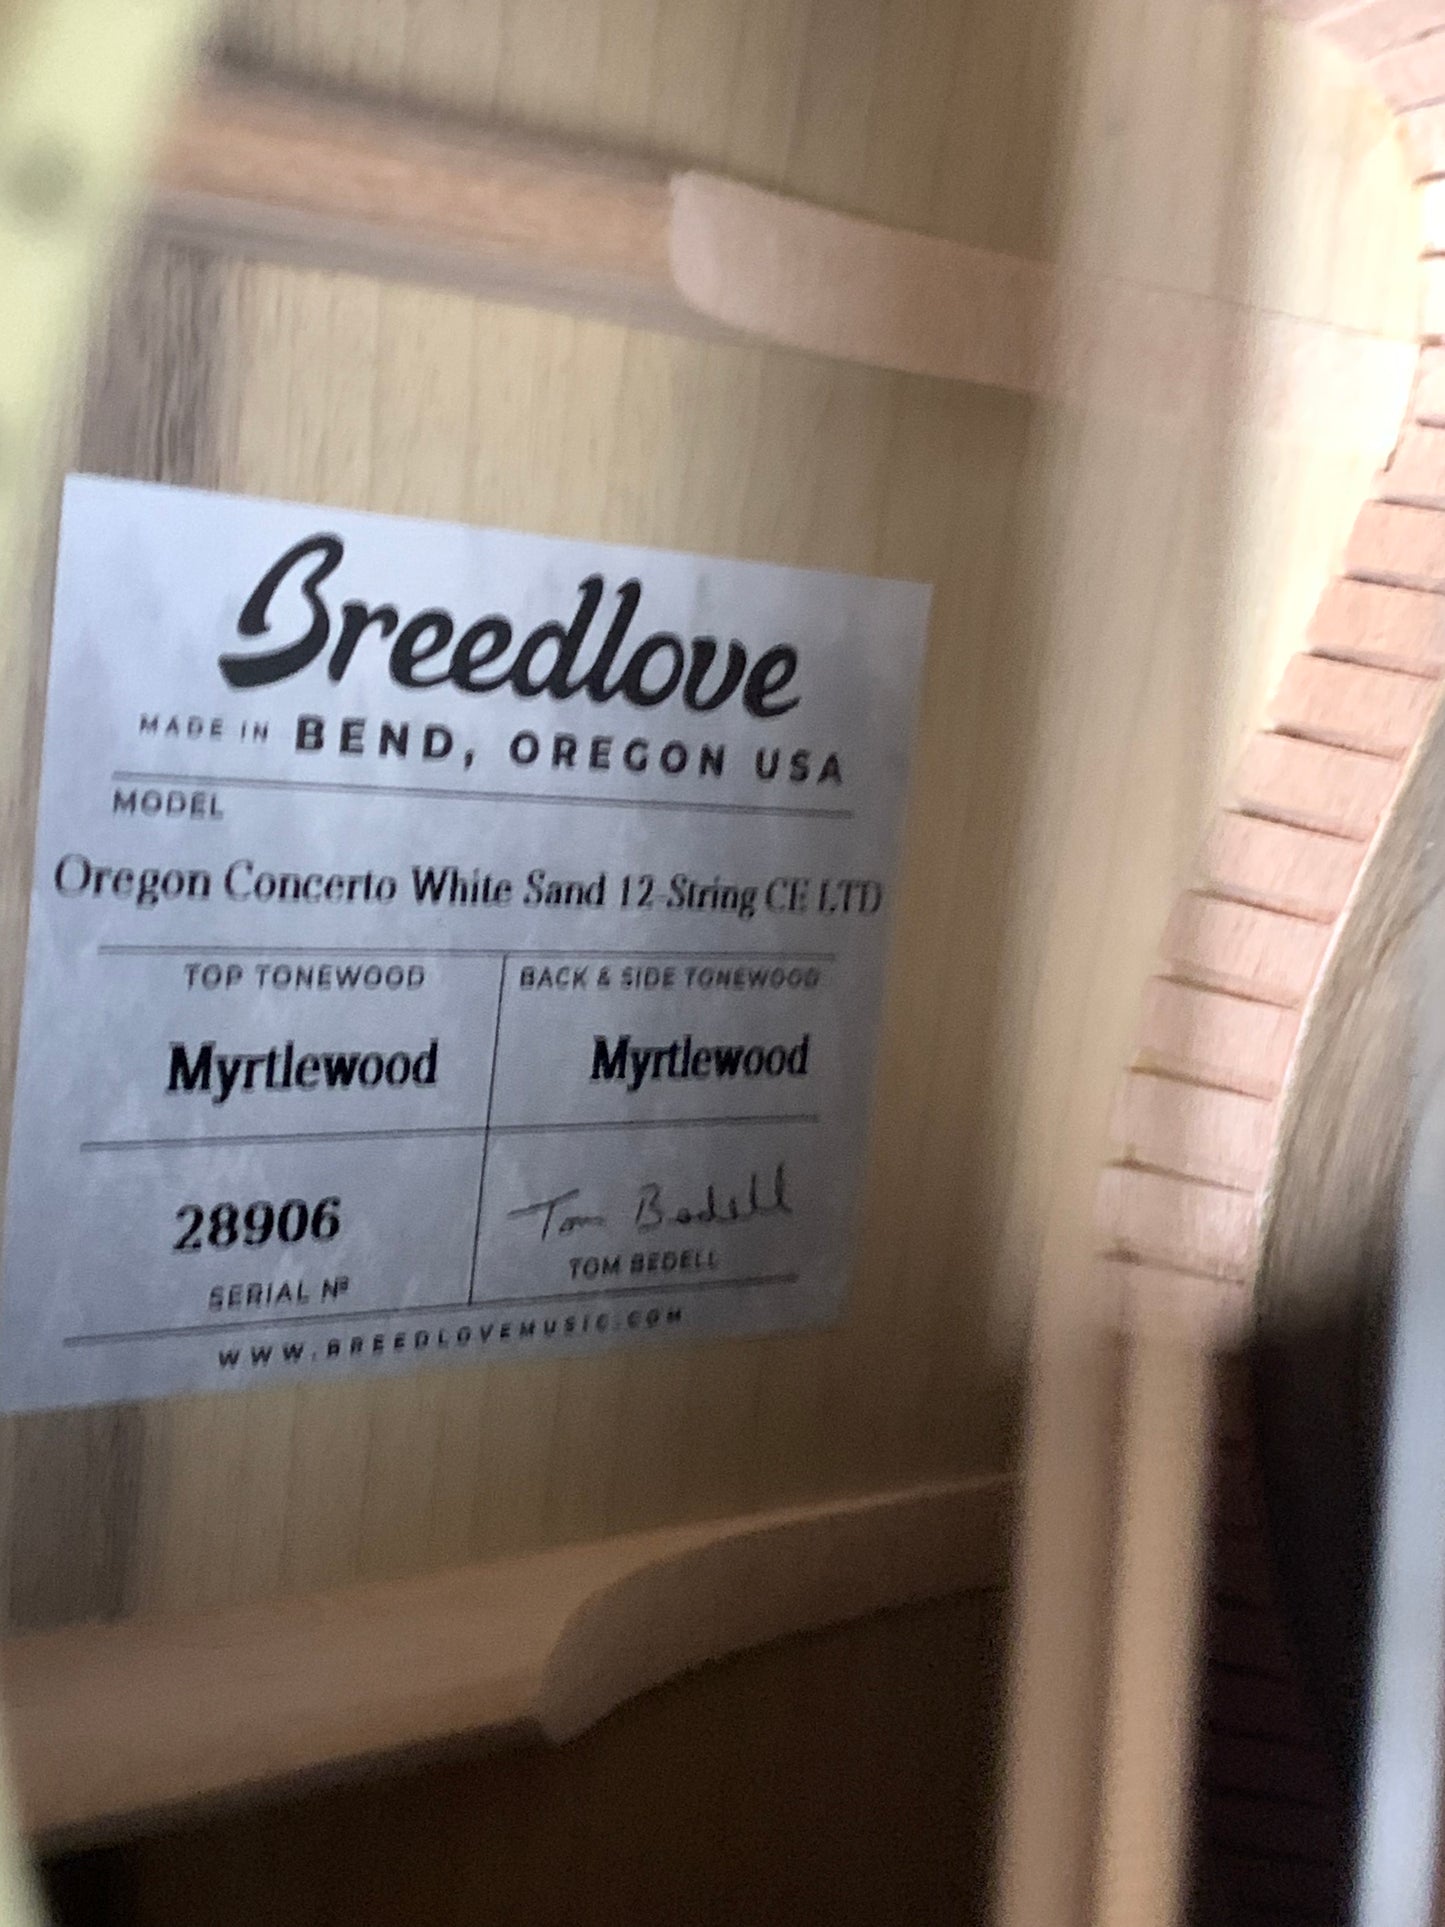 Breedlove Oregon Concerto White Sand 12 String CE LTD #28906